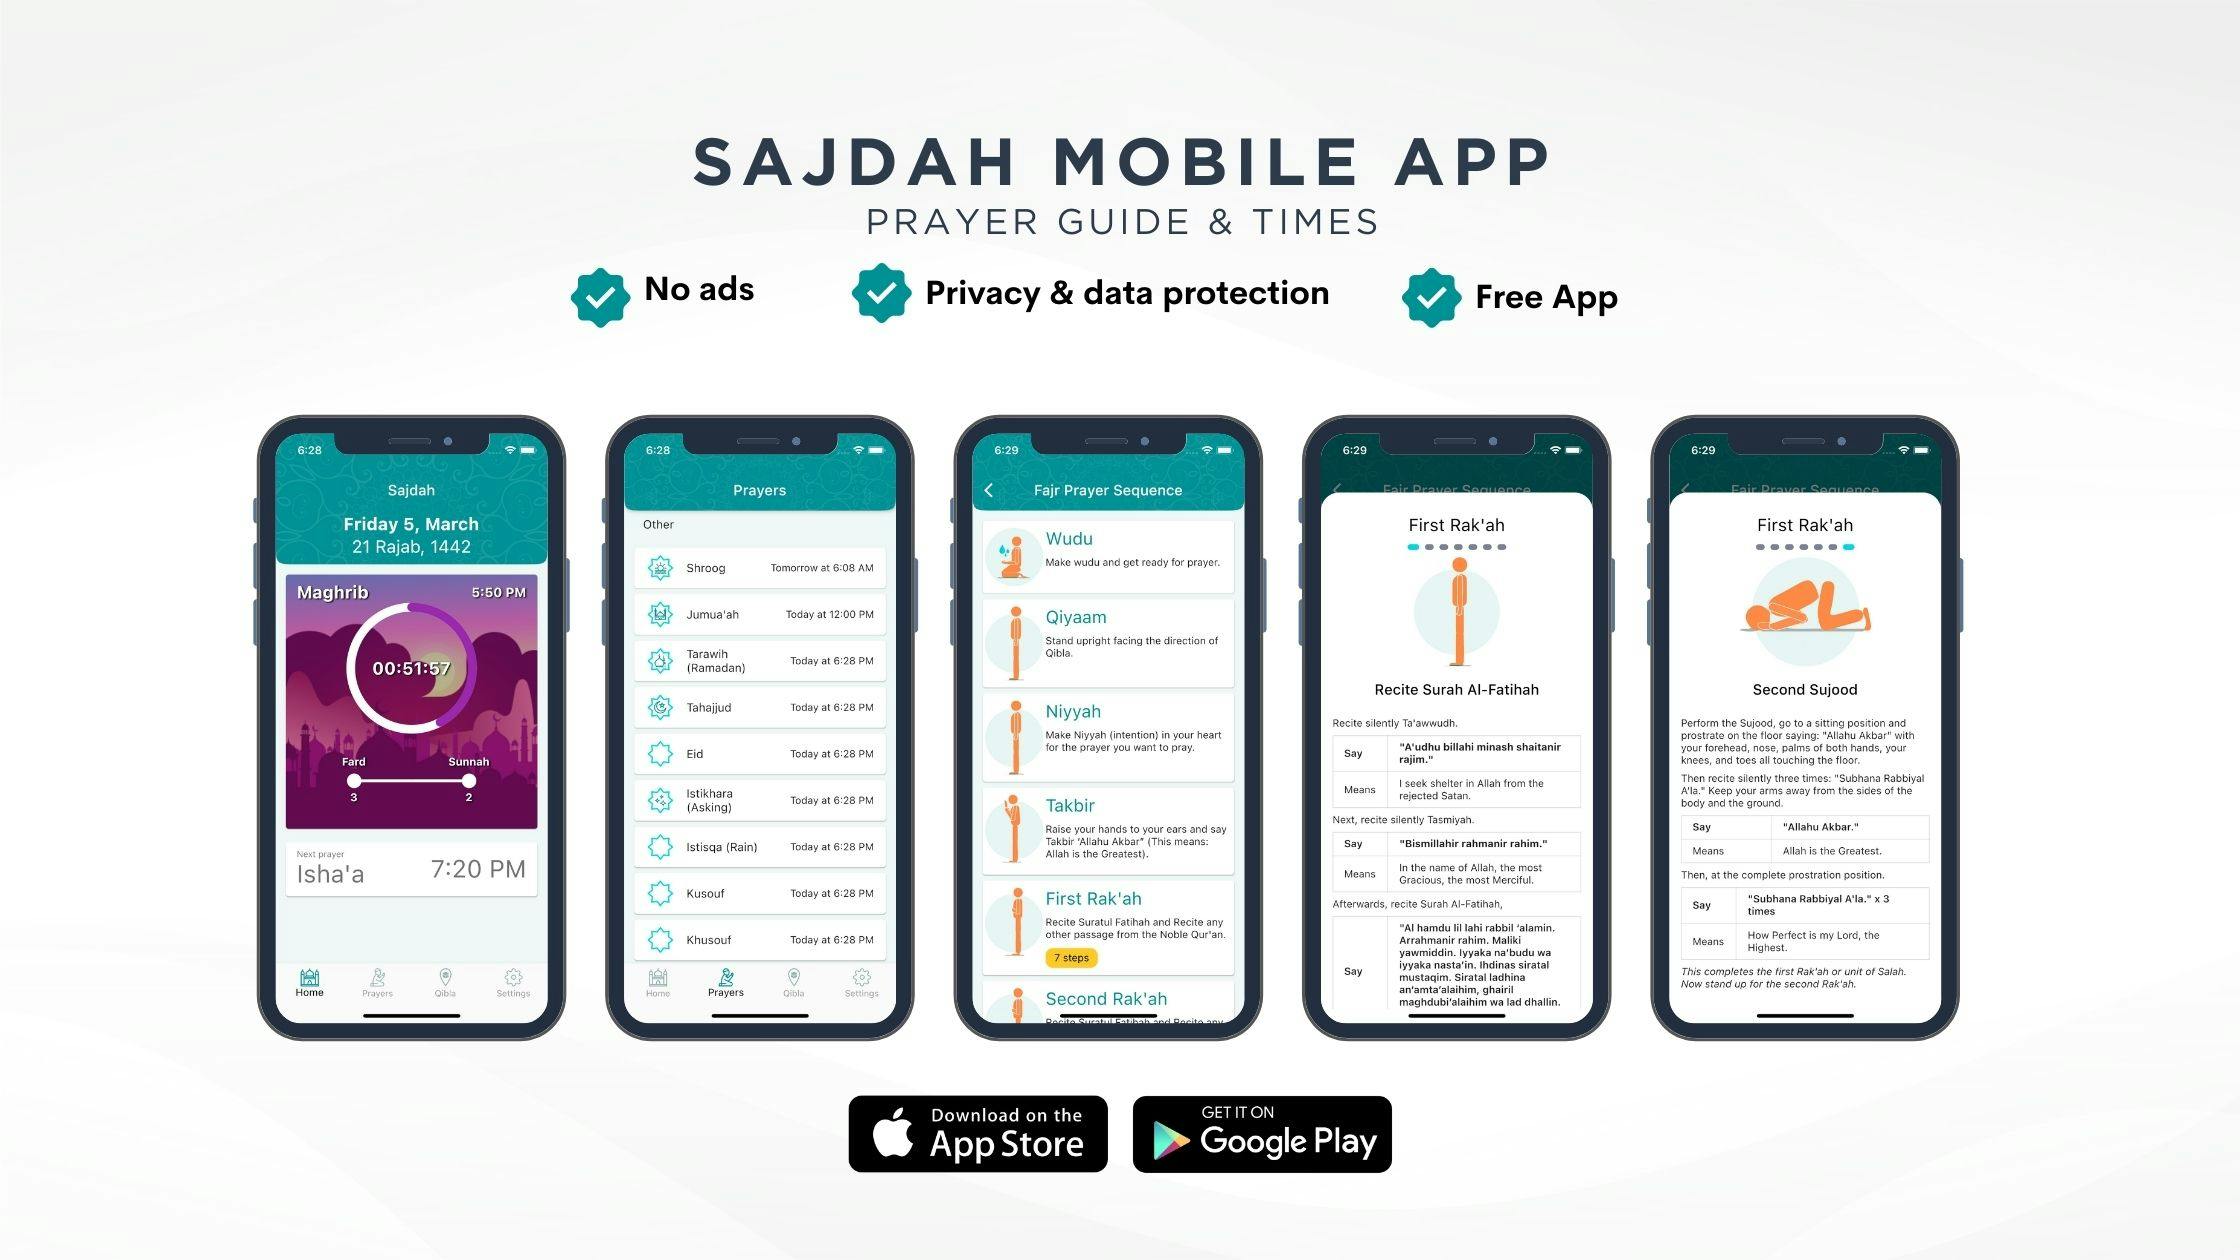 Sajdah Mobile App- Prayer Guide and Times 